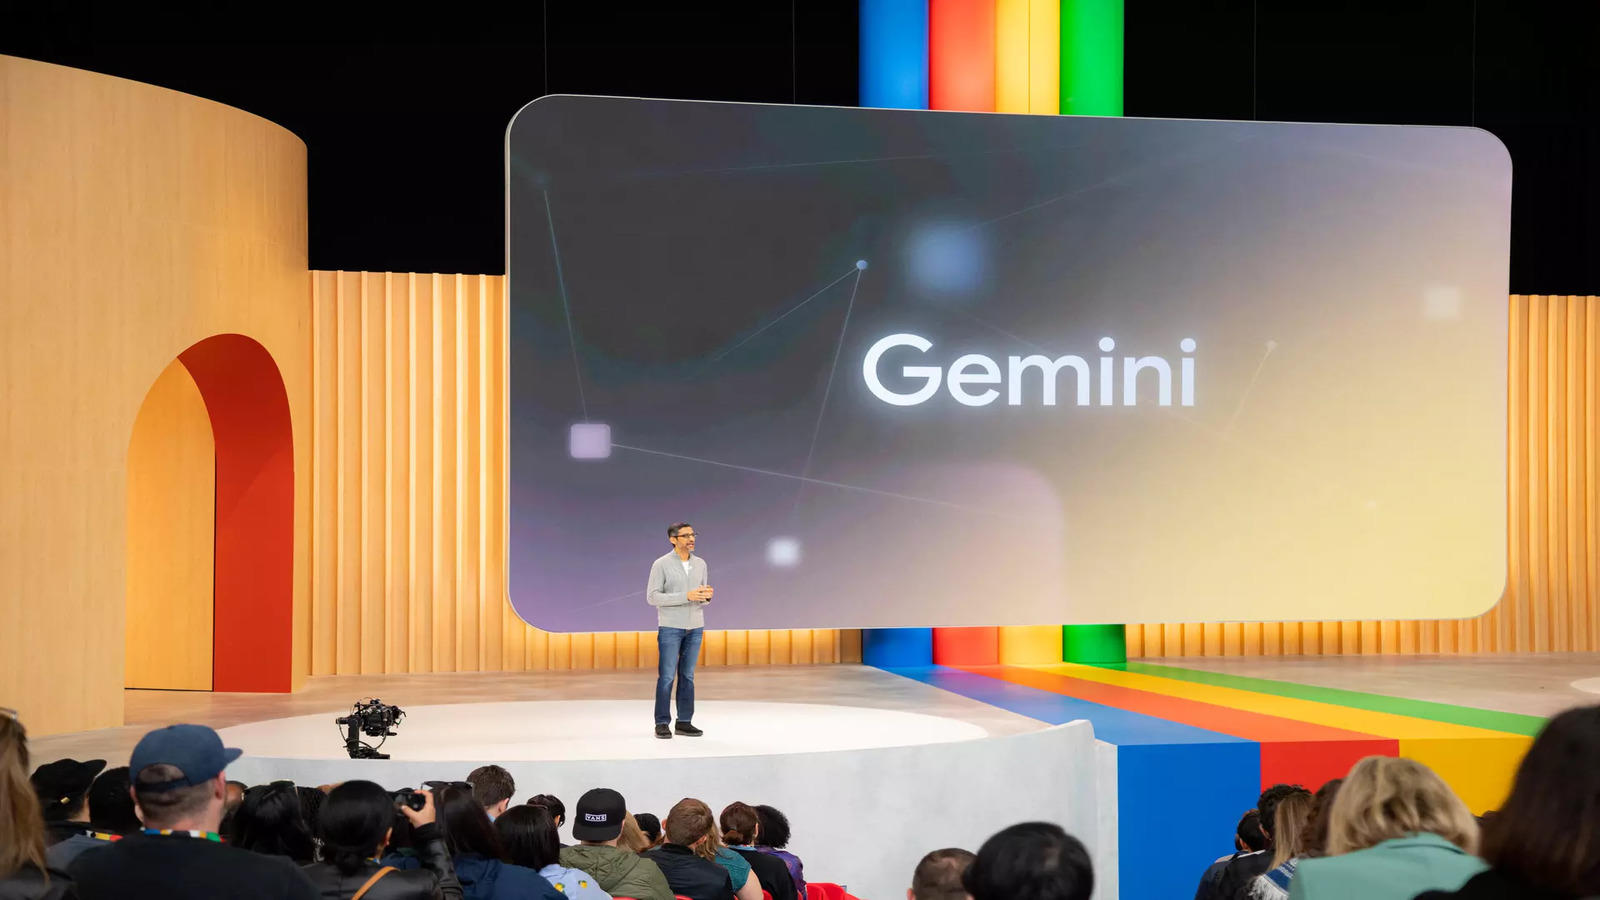 Google Chrome Introduces AI Writing Tool Powered By Gemini